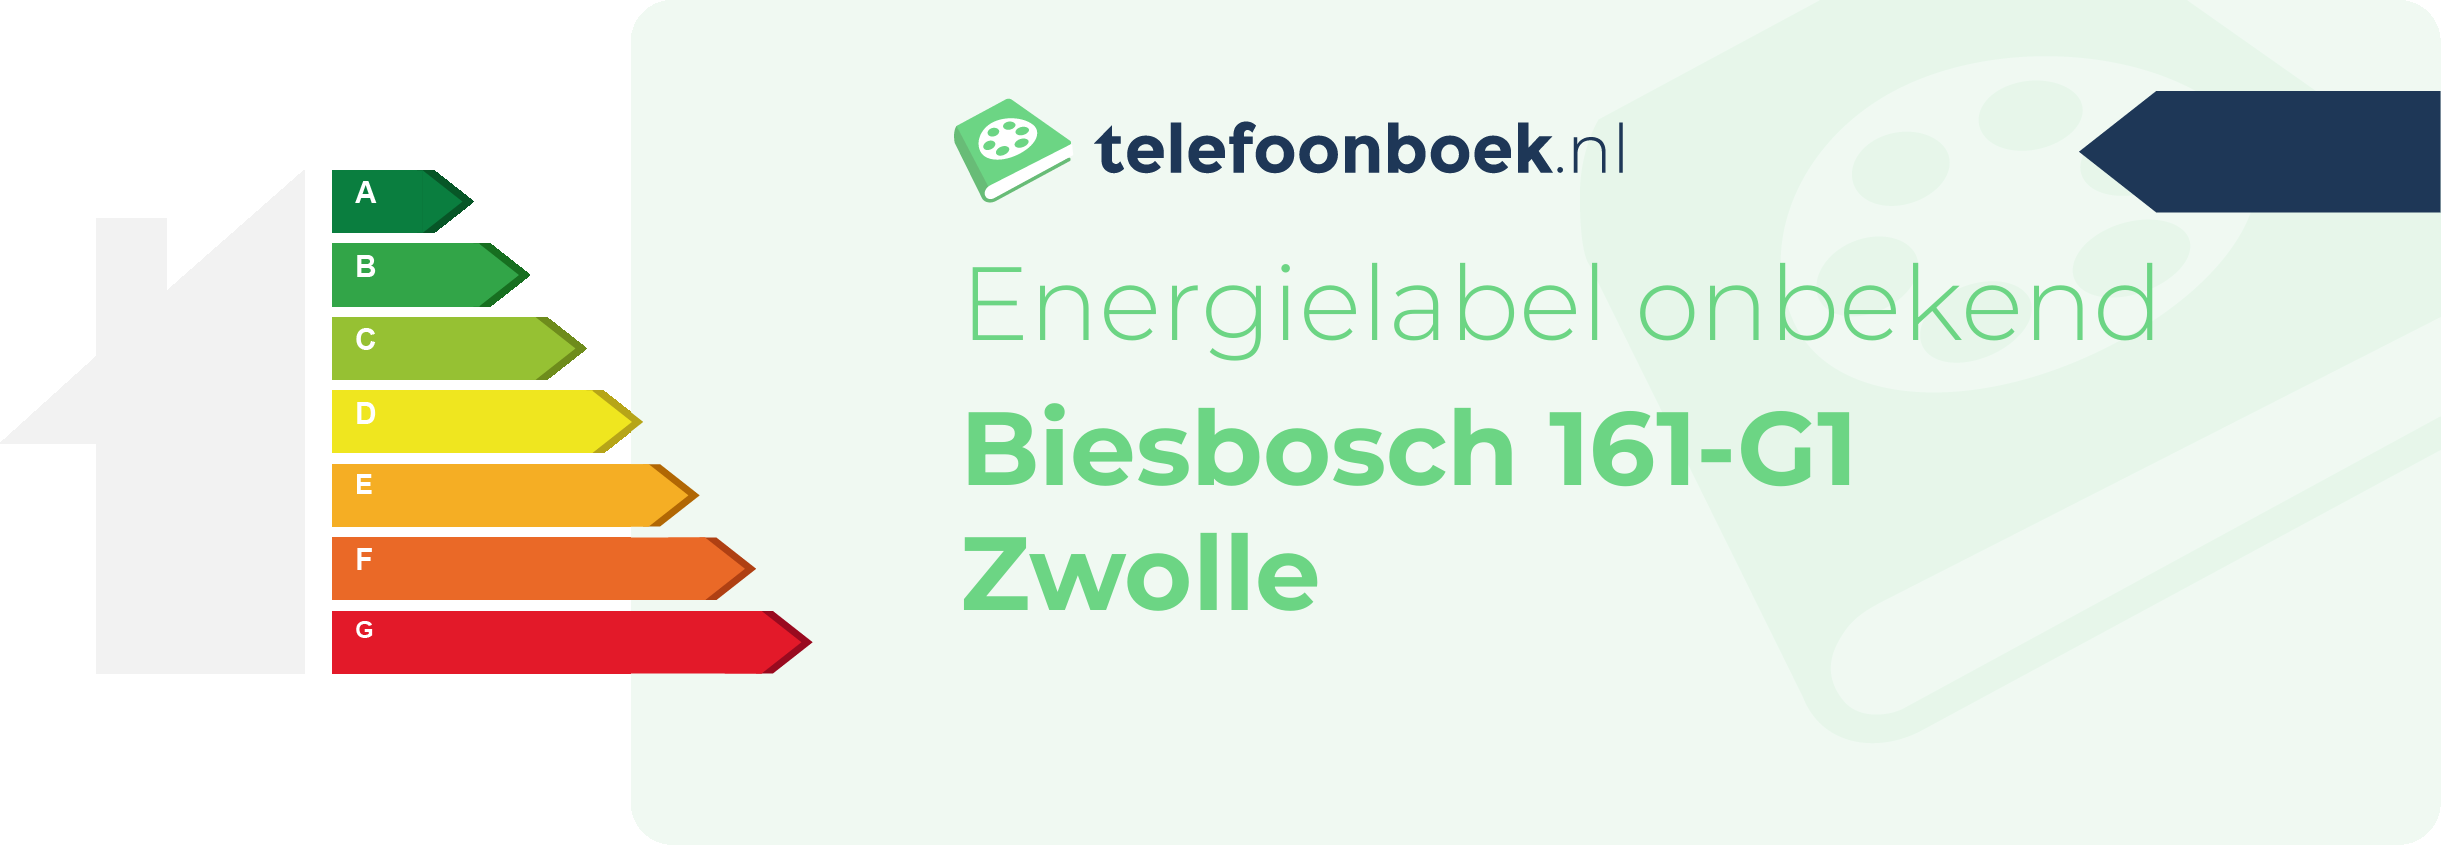 Energielabel Biesbosch 161-G1 Zwolle